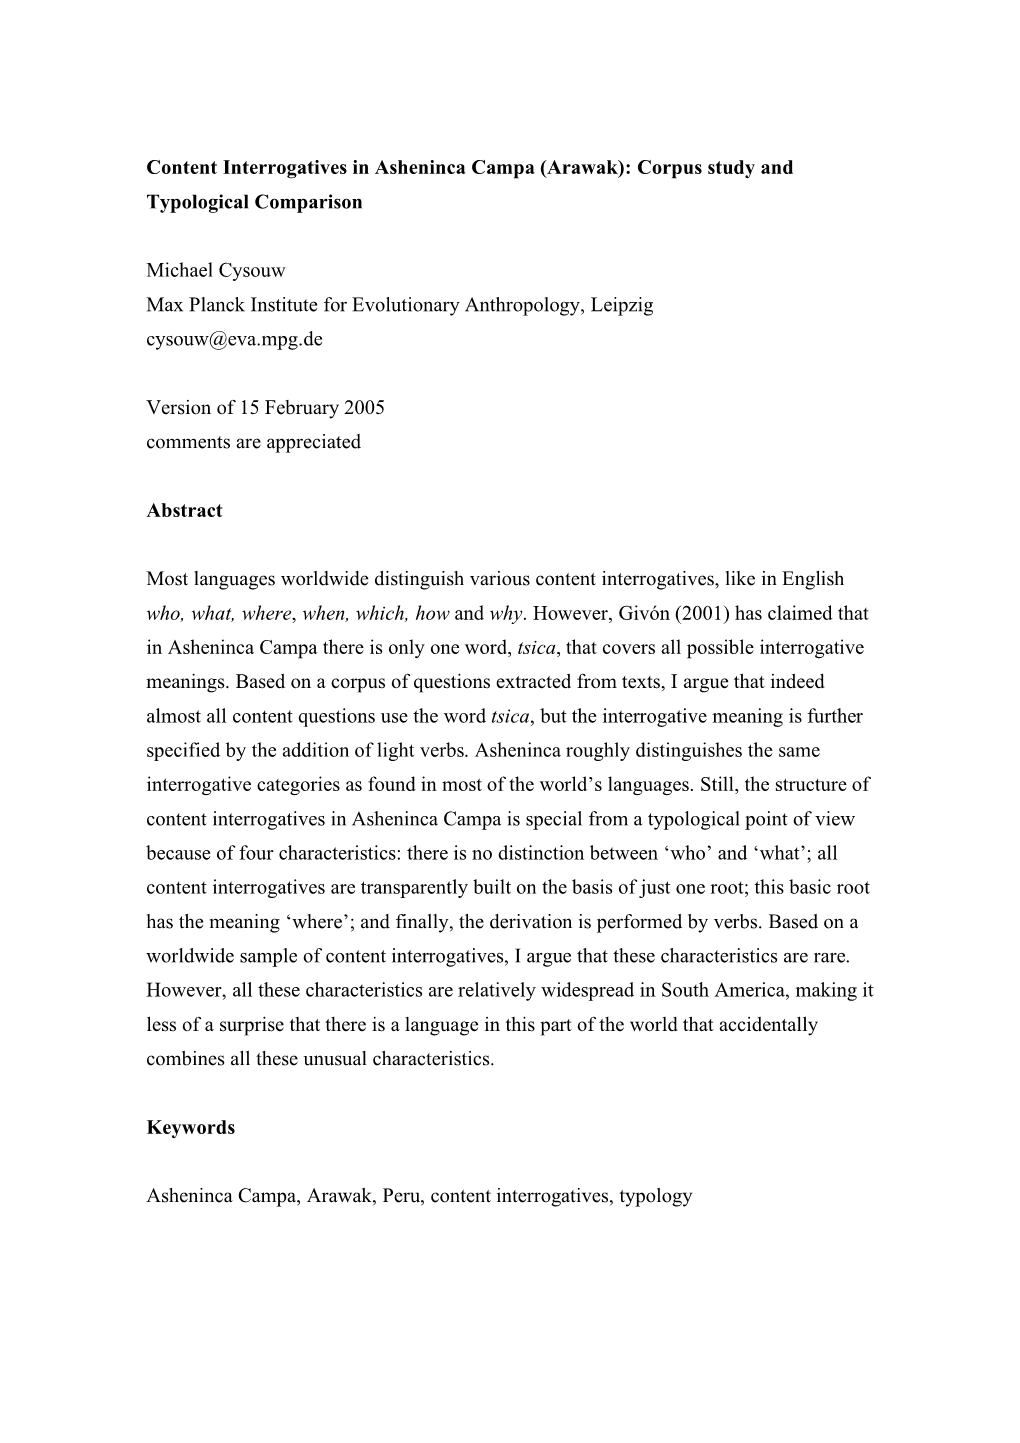 Content Interrogatives in Asheninca Campa (Arawak): Corpus Study and Typological Comparison